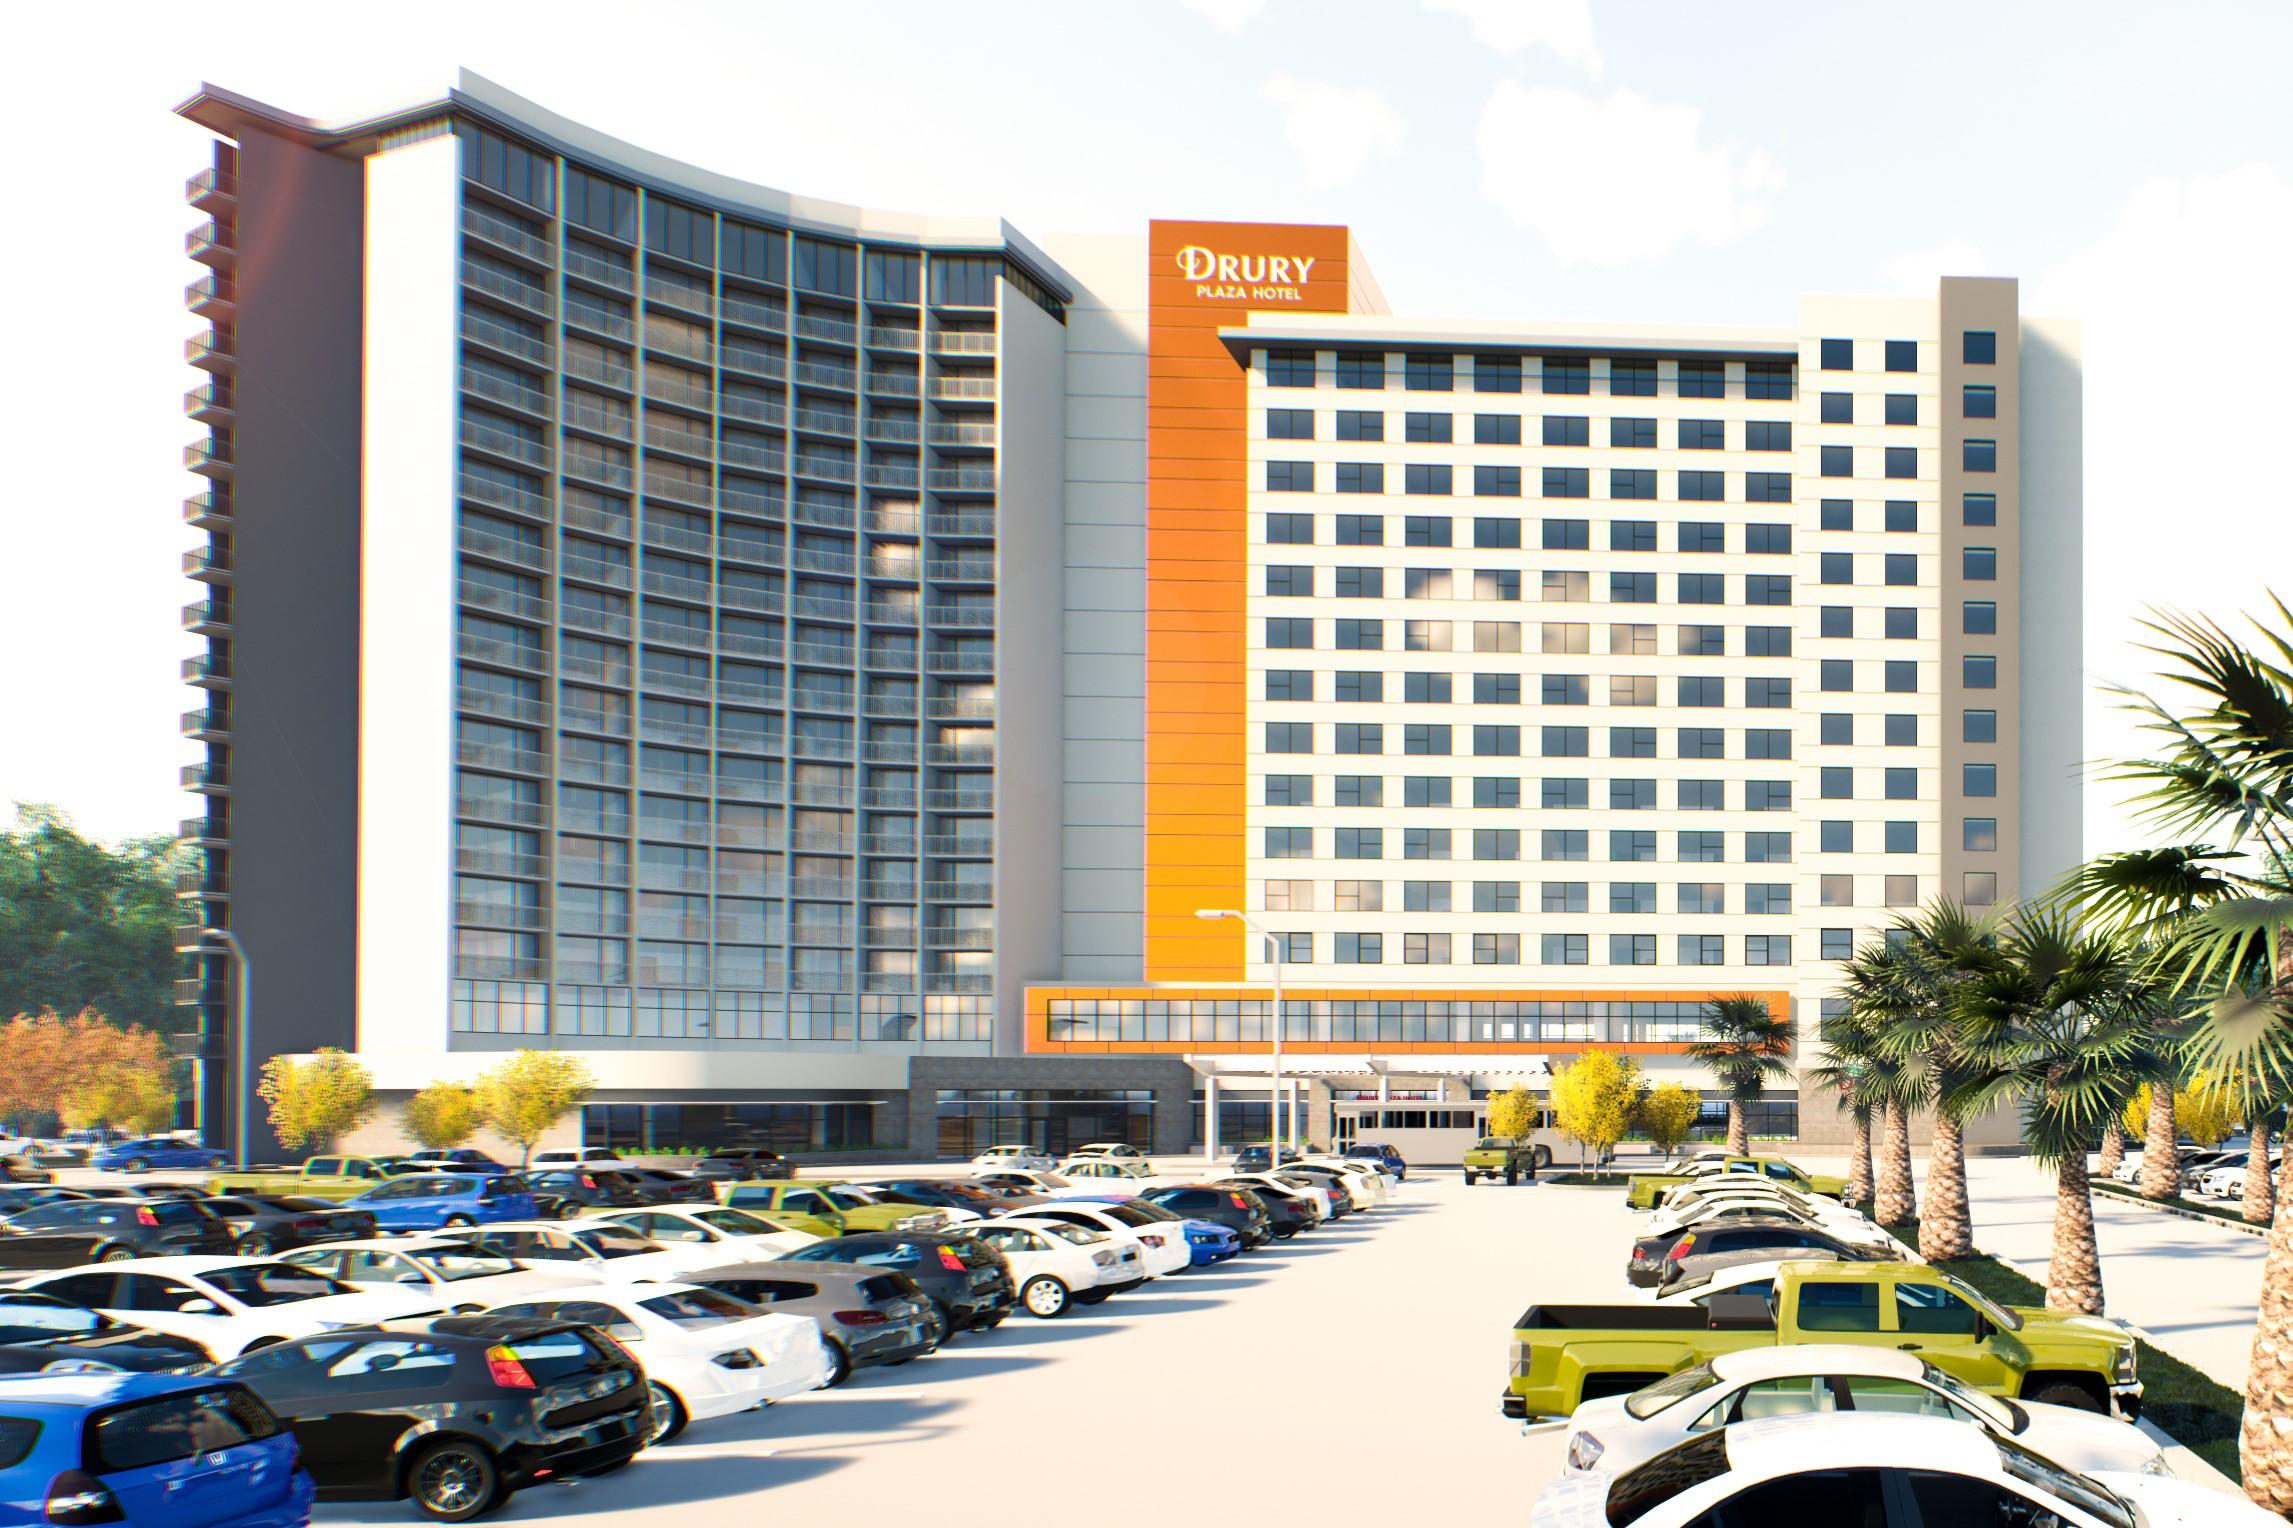 Drury Plaza Hotel Orlando Added to list of Walt Disney World Hotels with Early Entry